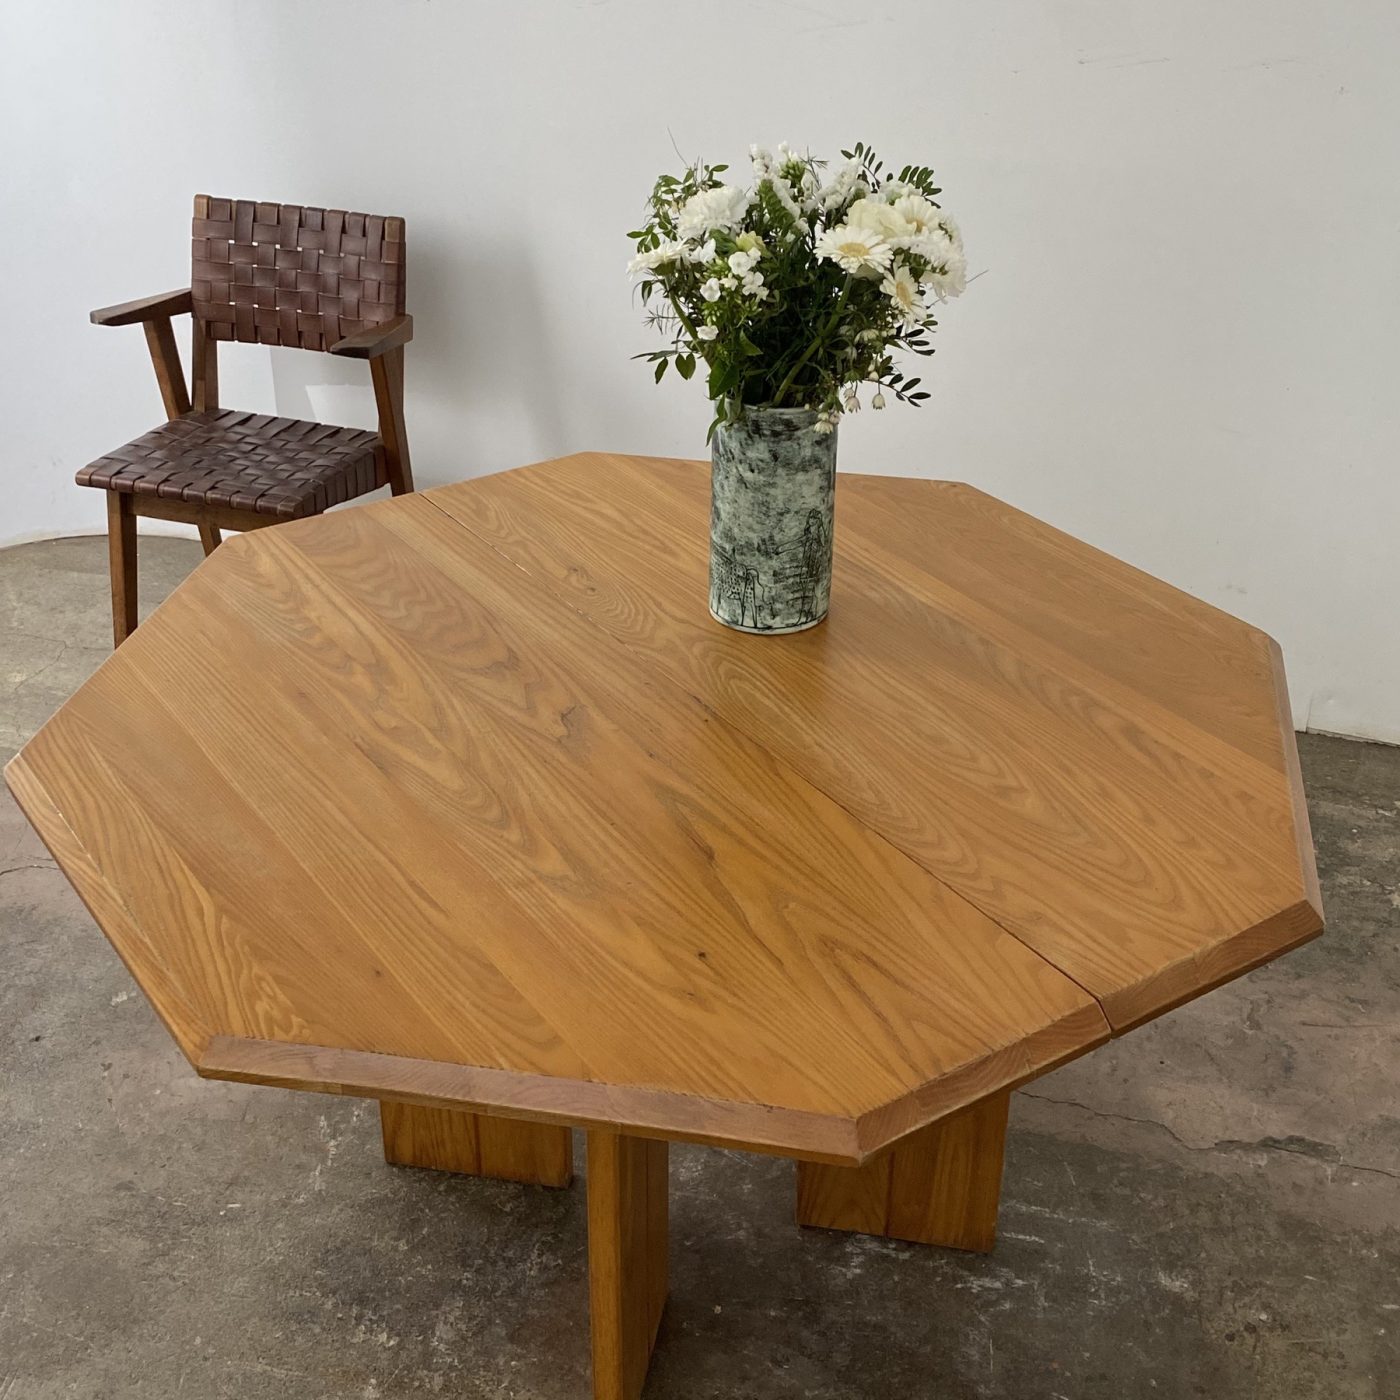 objet-vagabond-elm-wood-table0005